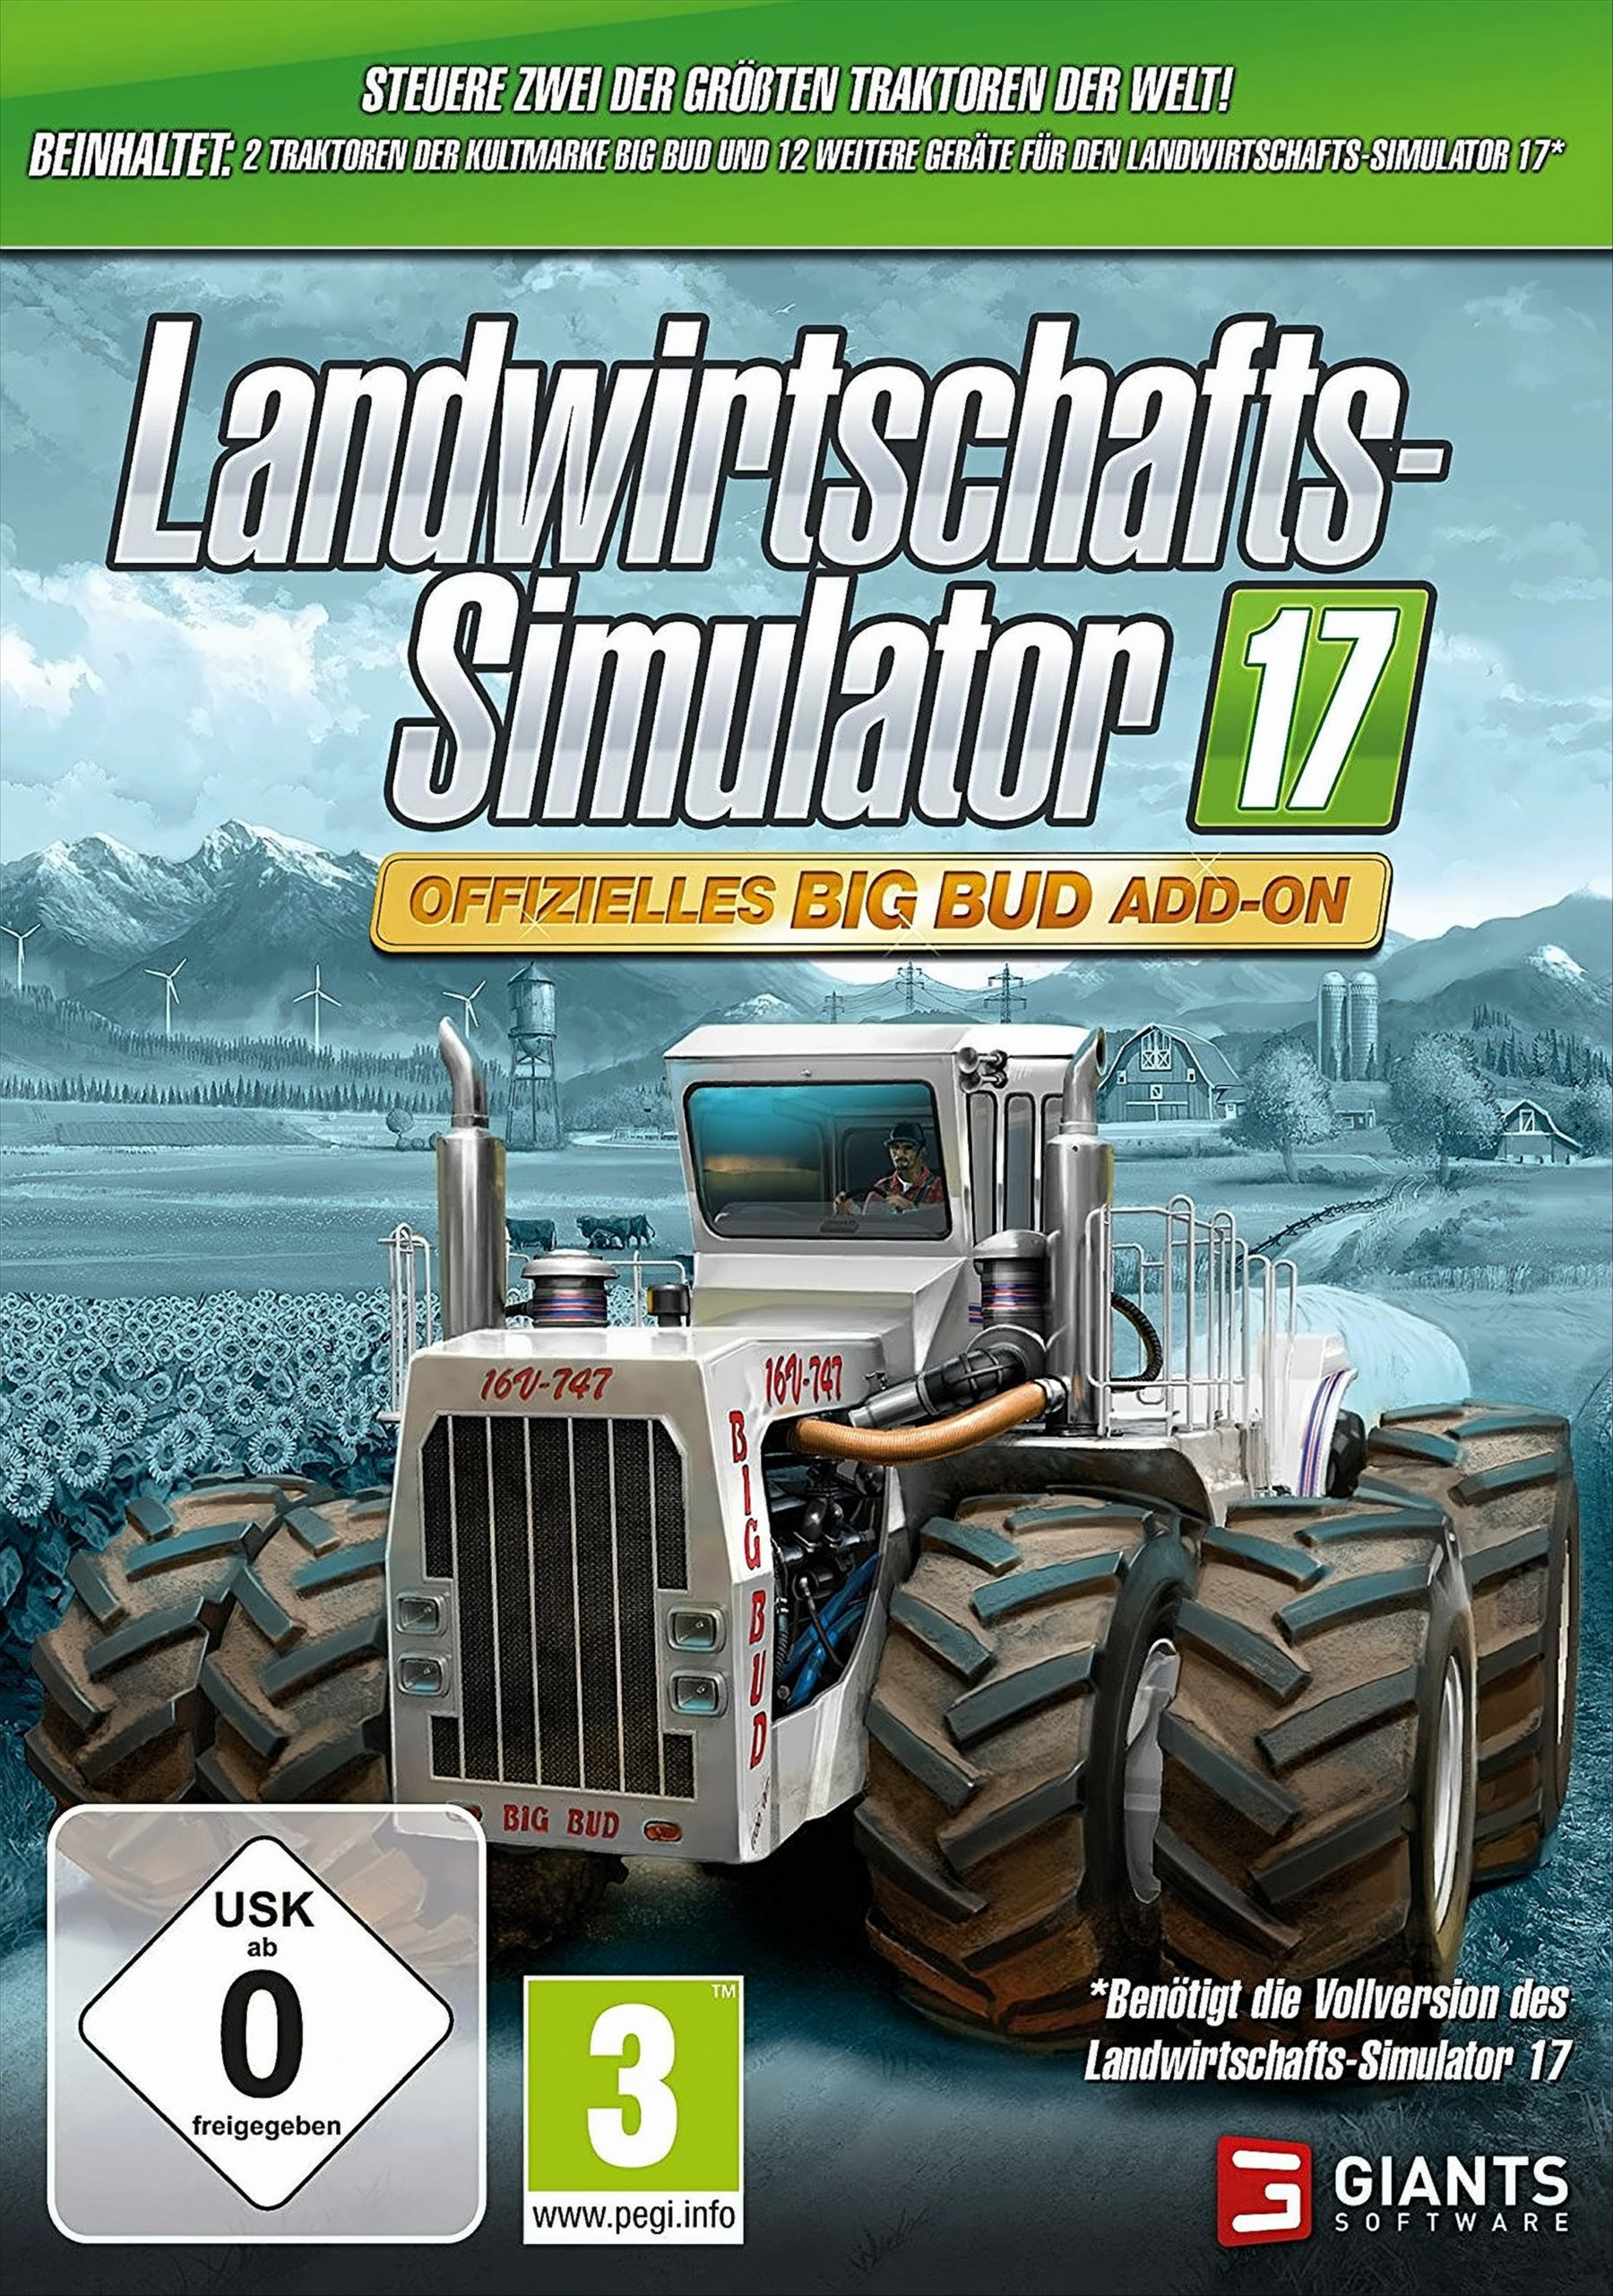 Big Offizielles Add-On [PC] 17: - Bud Landwirtschafts-Simulator